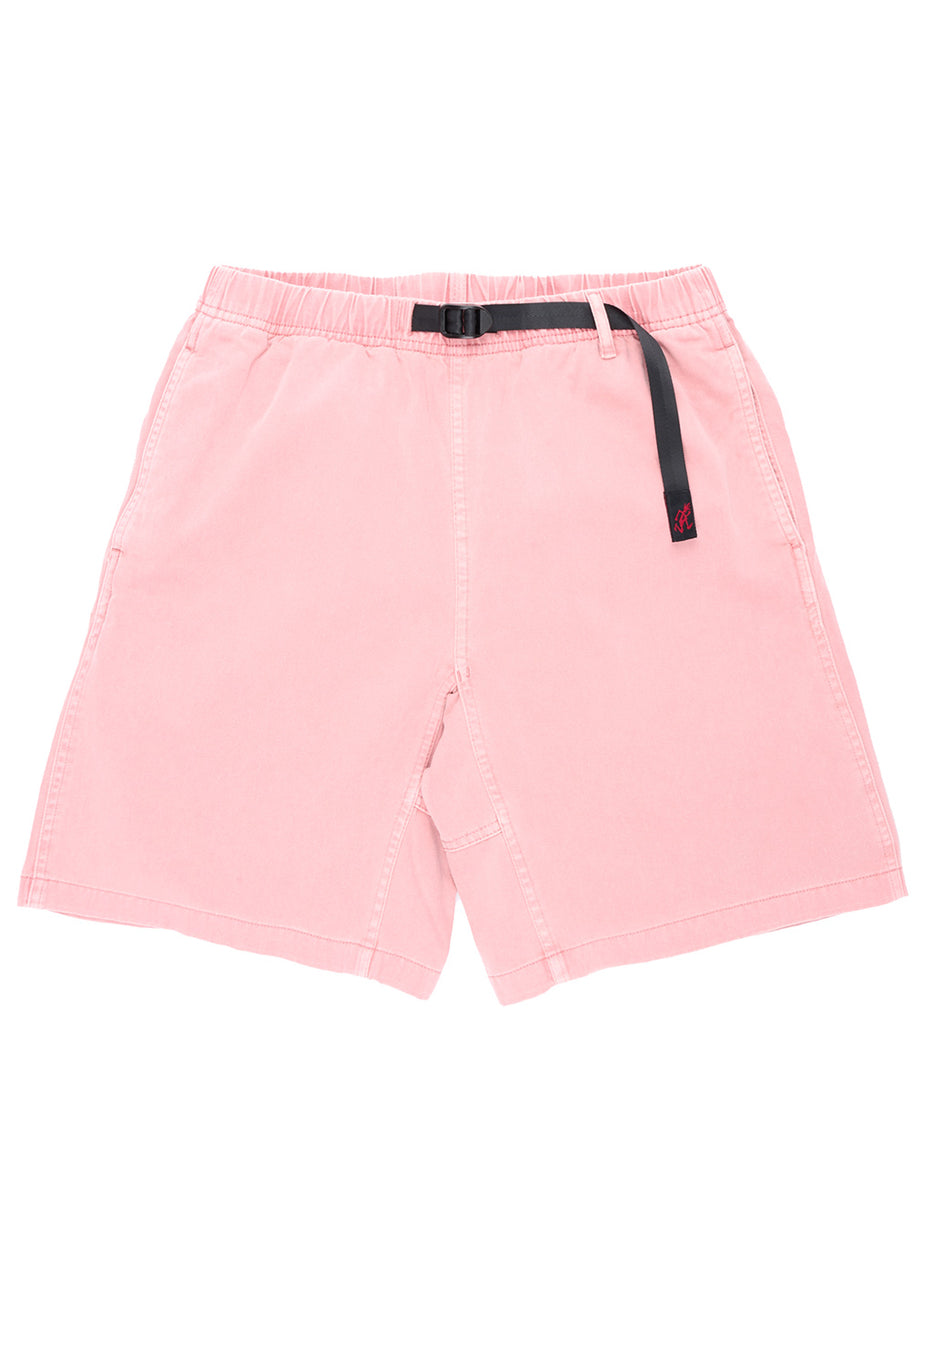 Gramicci Men's Pigment Dye G Shorts - Coral